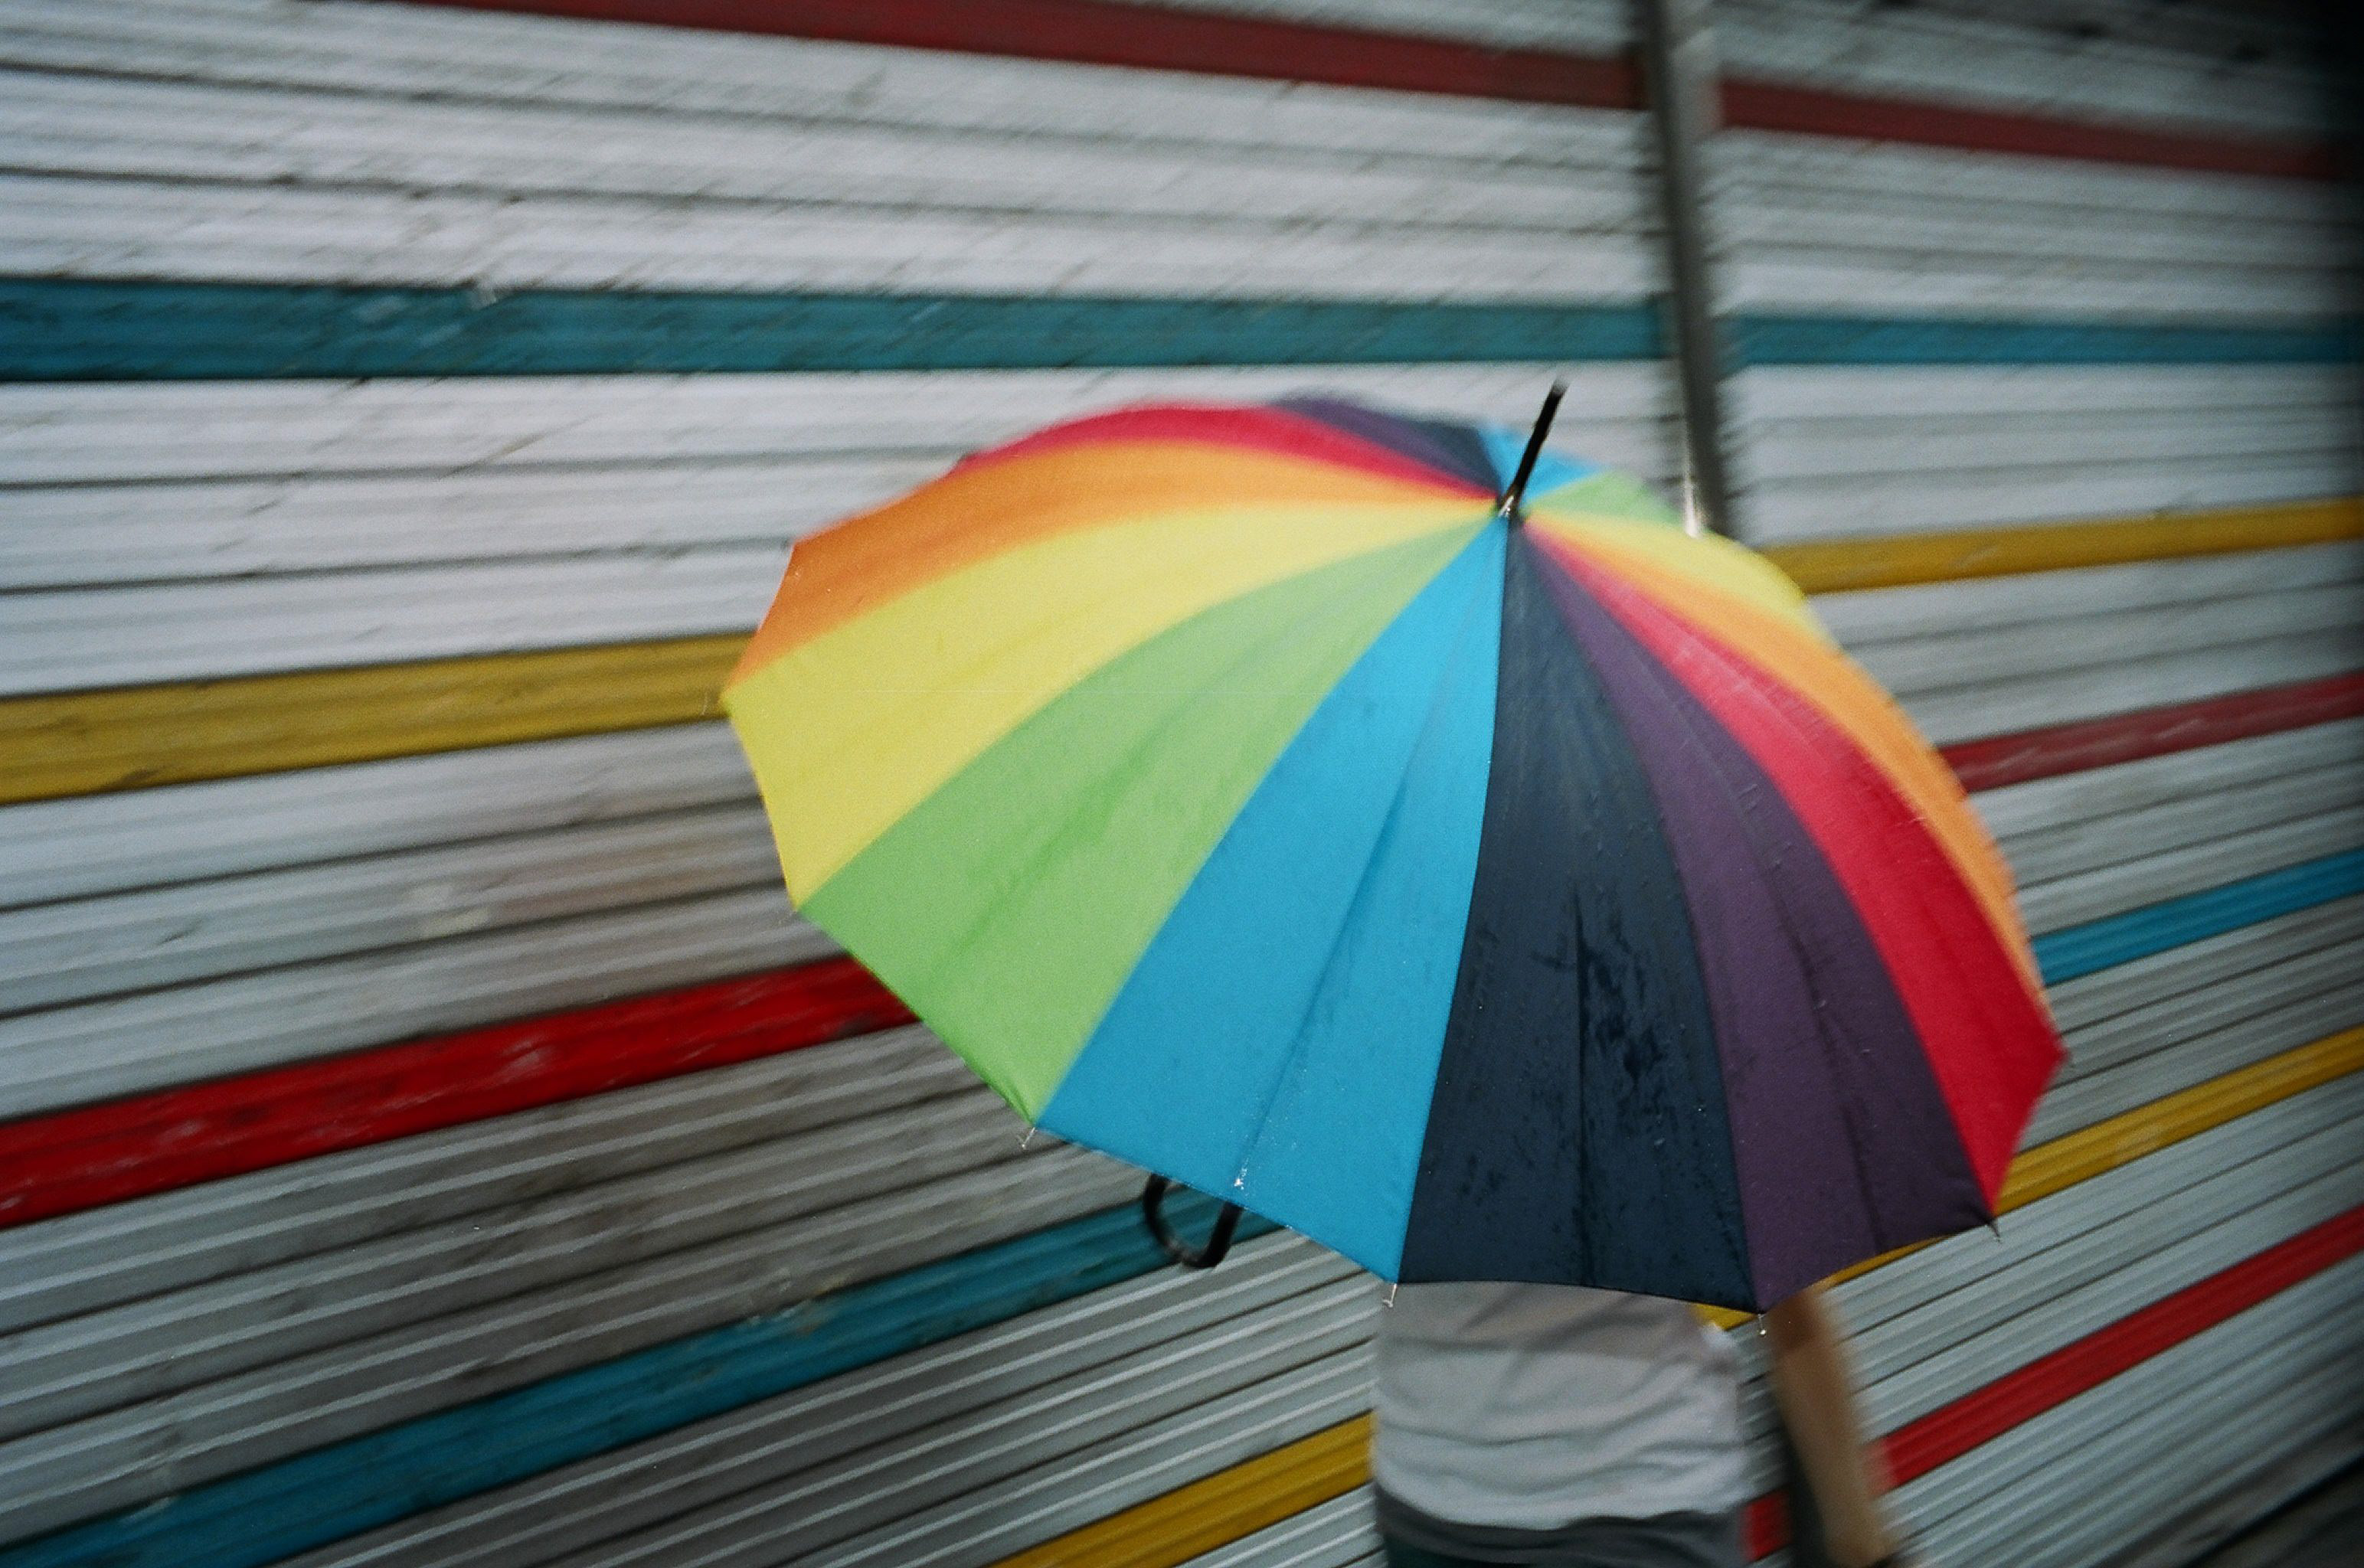 Rainbow umbrella. Hong Kong, 2013. Kodak Portra 400 film (35mm)